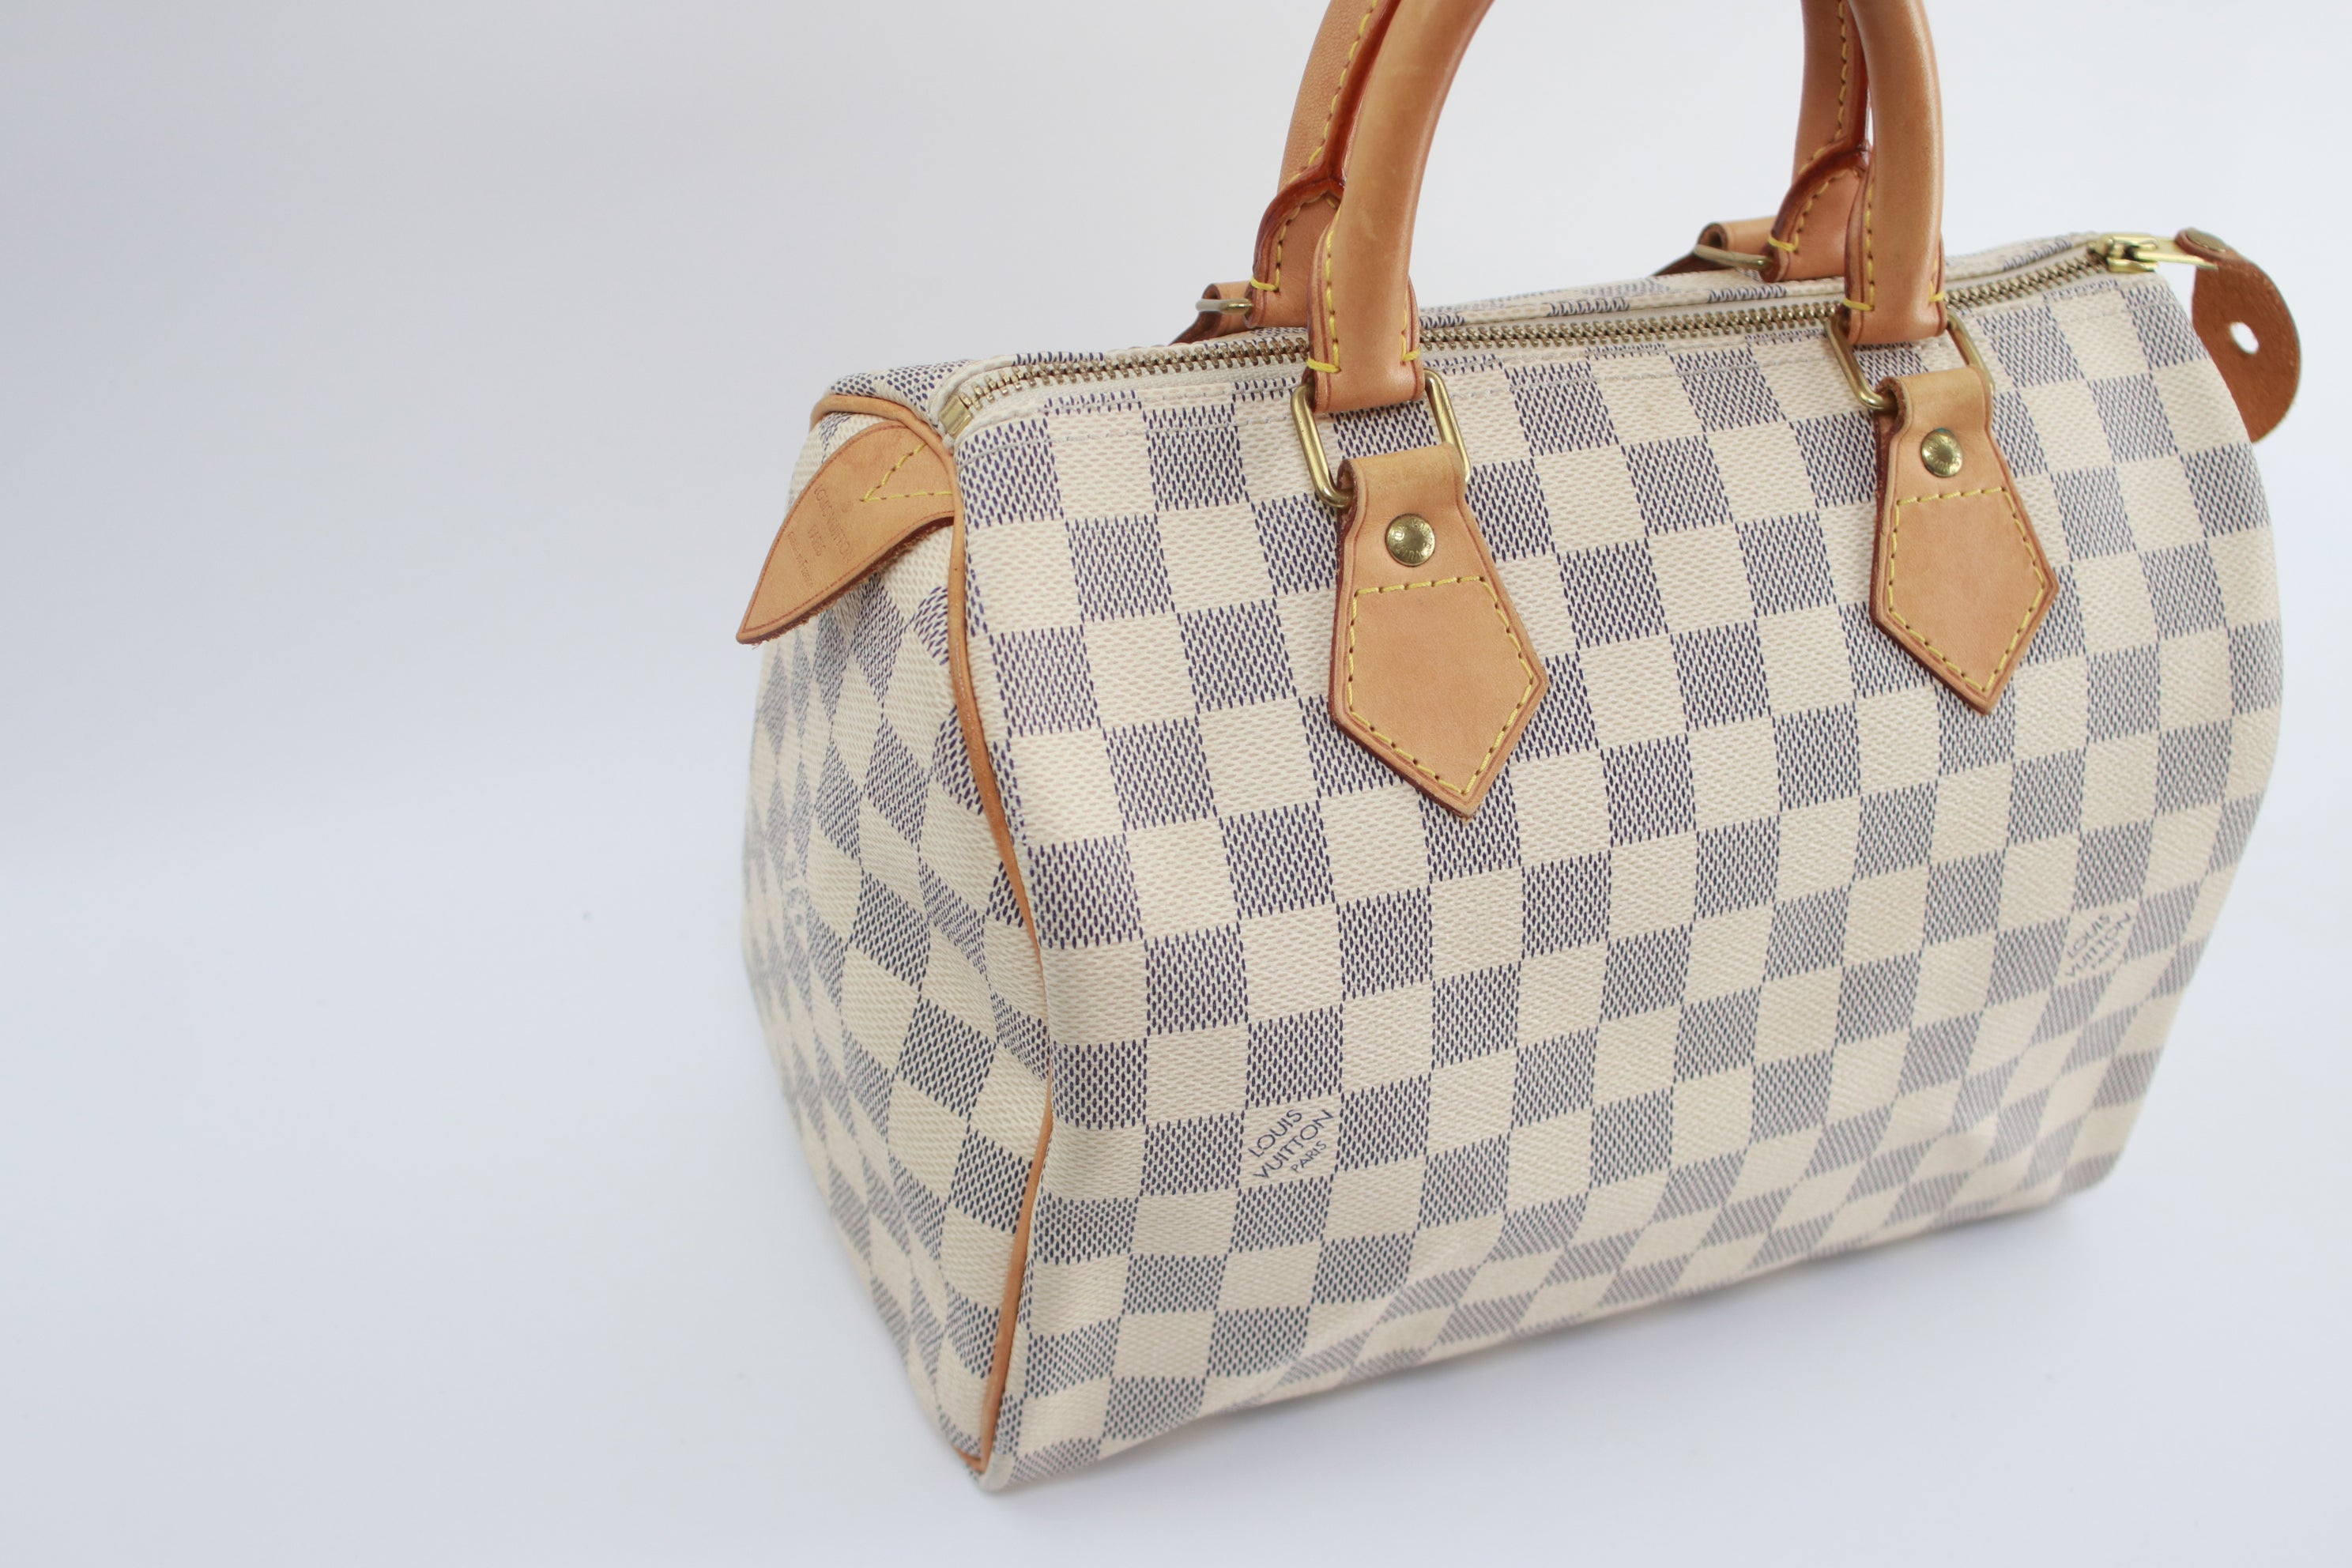 Louis Vuitton Speedy 25 Damier Azur Handbag Used (6111)